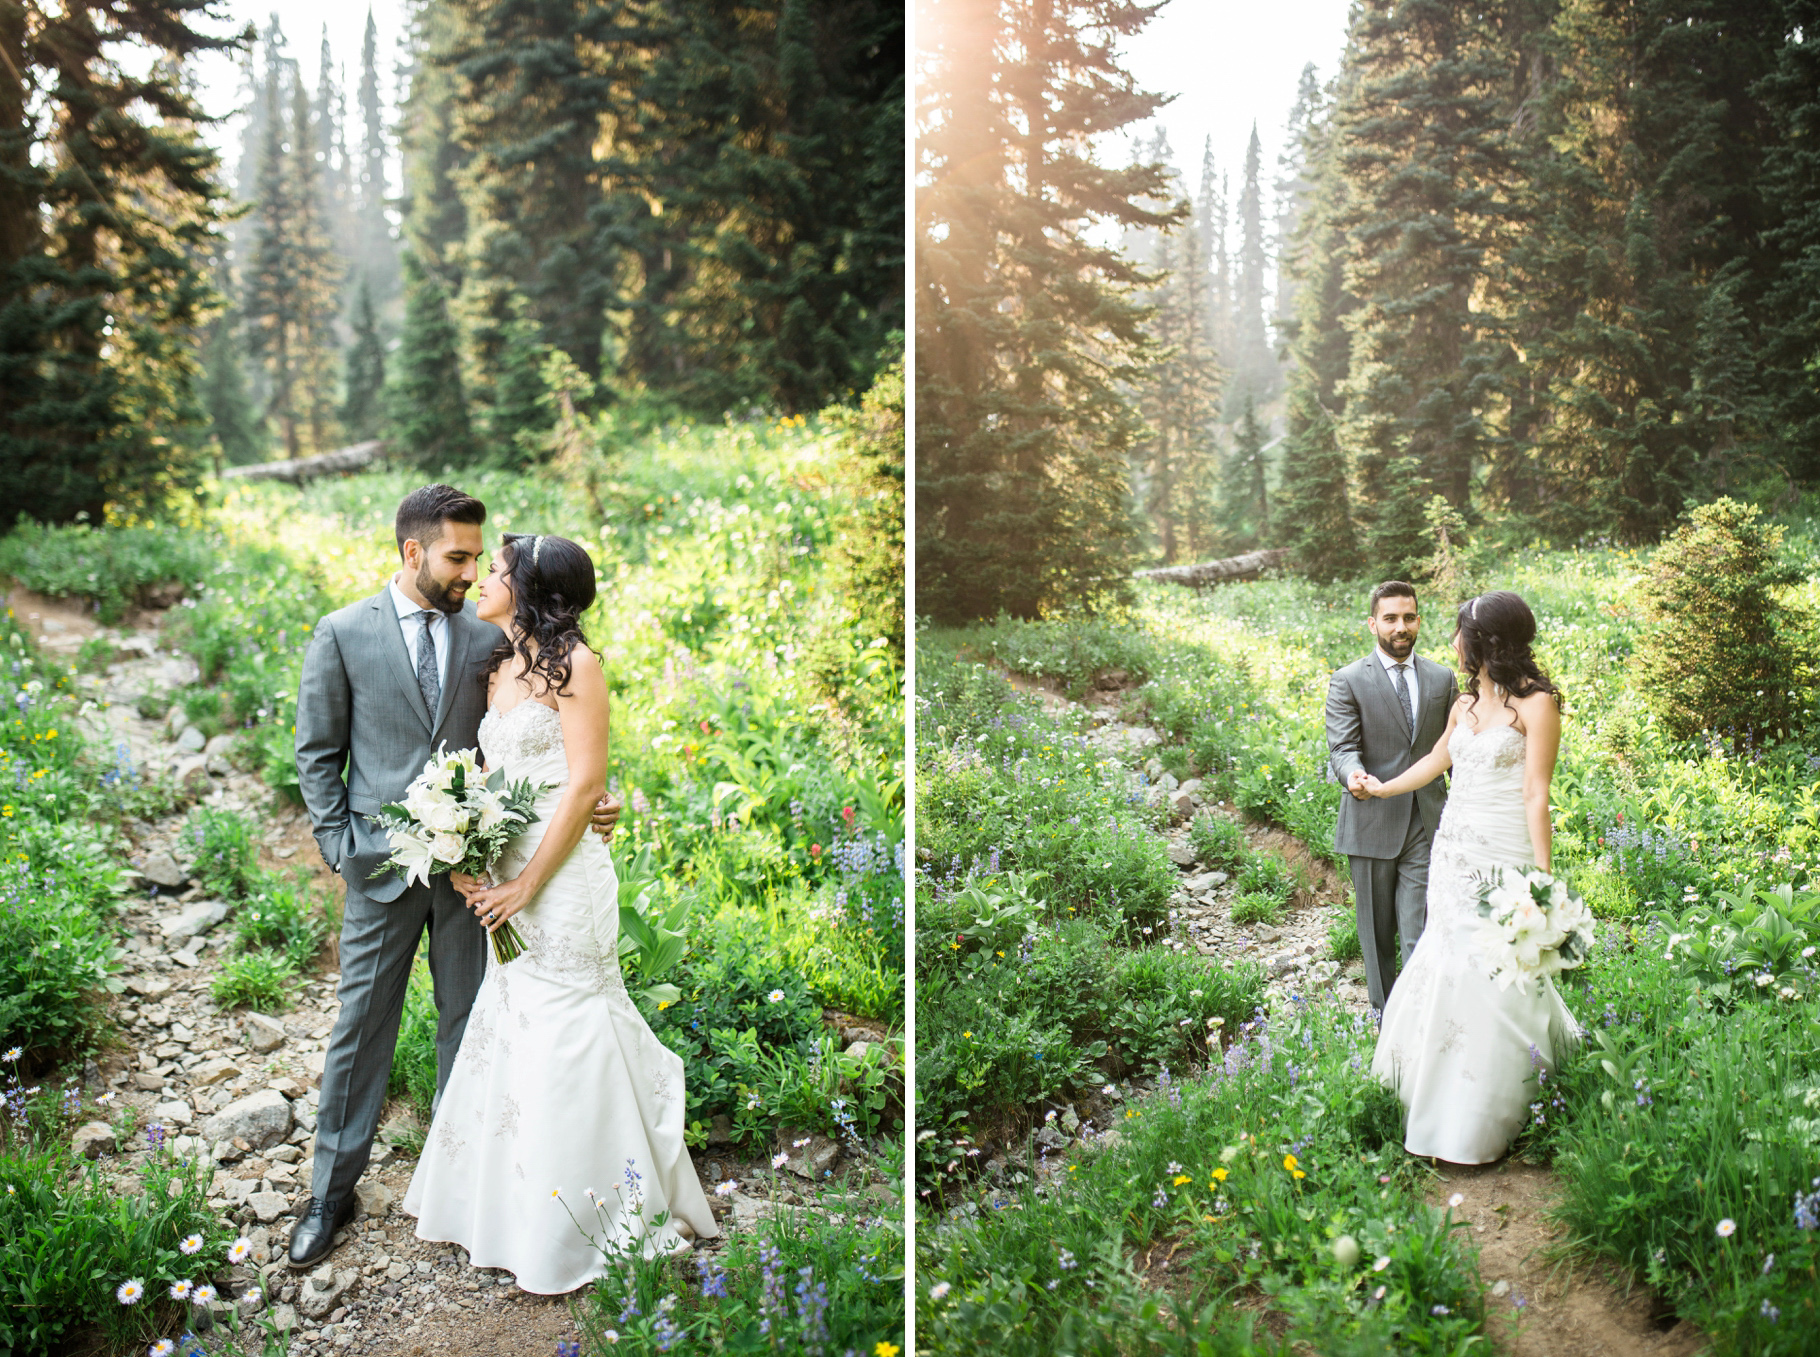 Tipsoo-Lake-Mt-Rainier-Wildflowers-Wedding-Photographer-Seattle-Photography-6